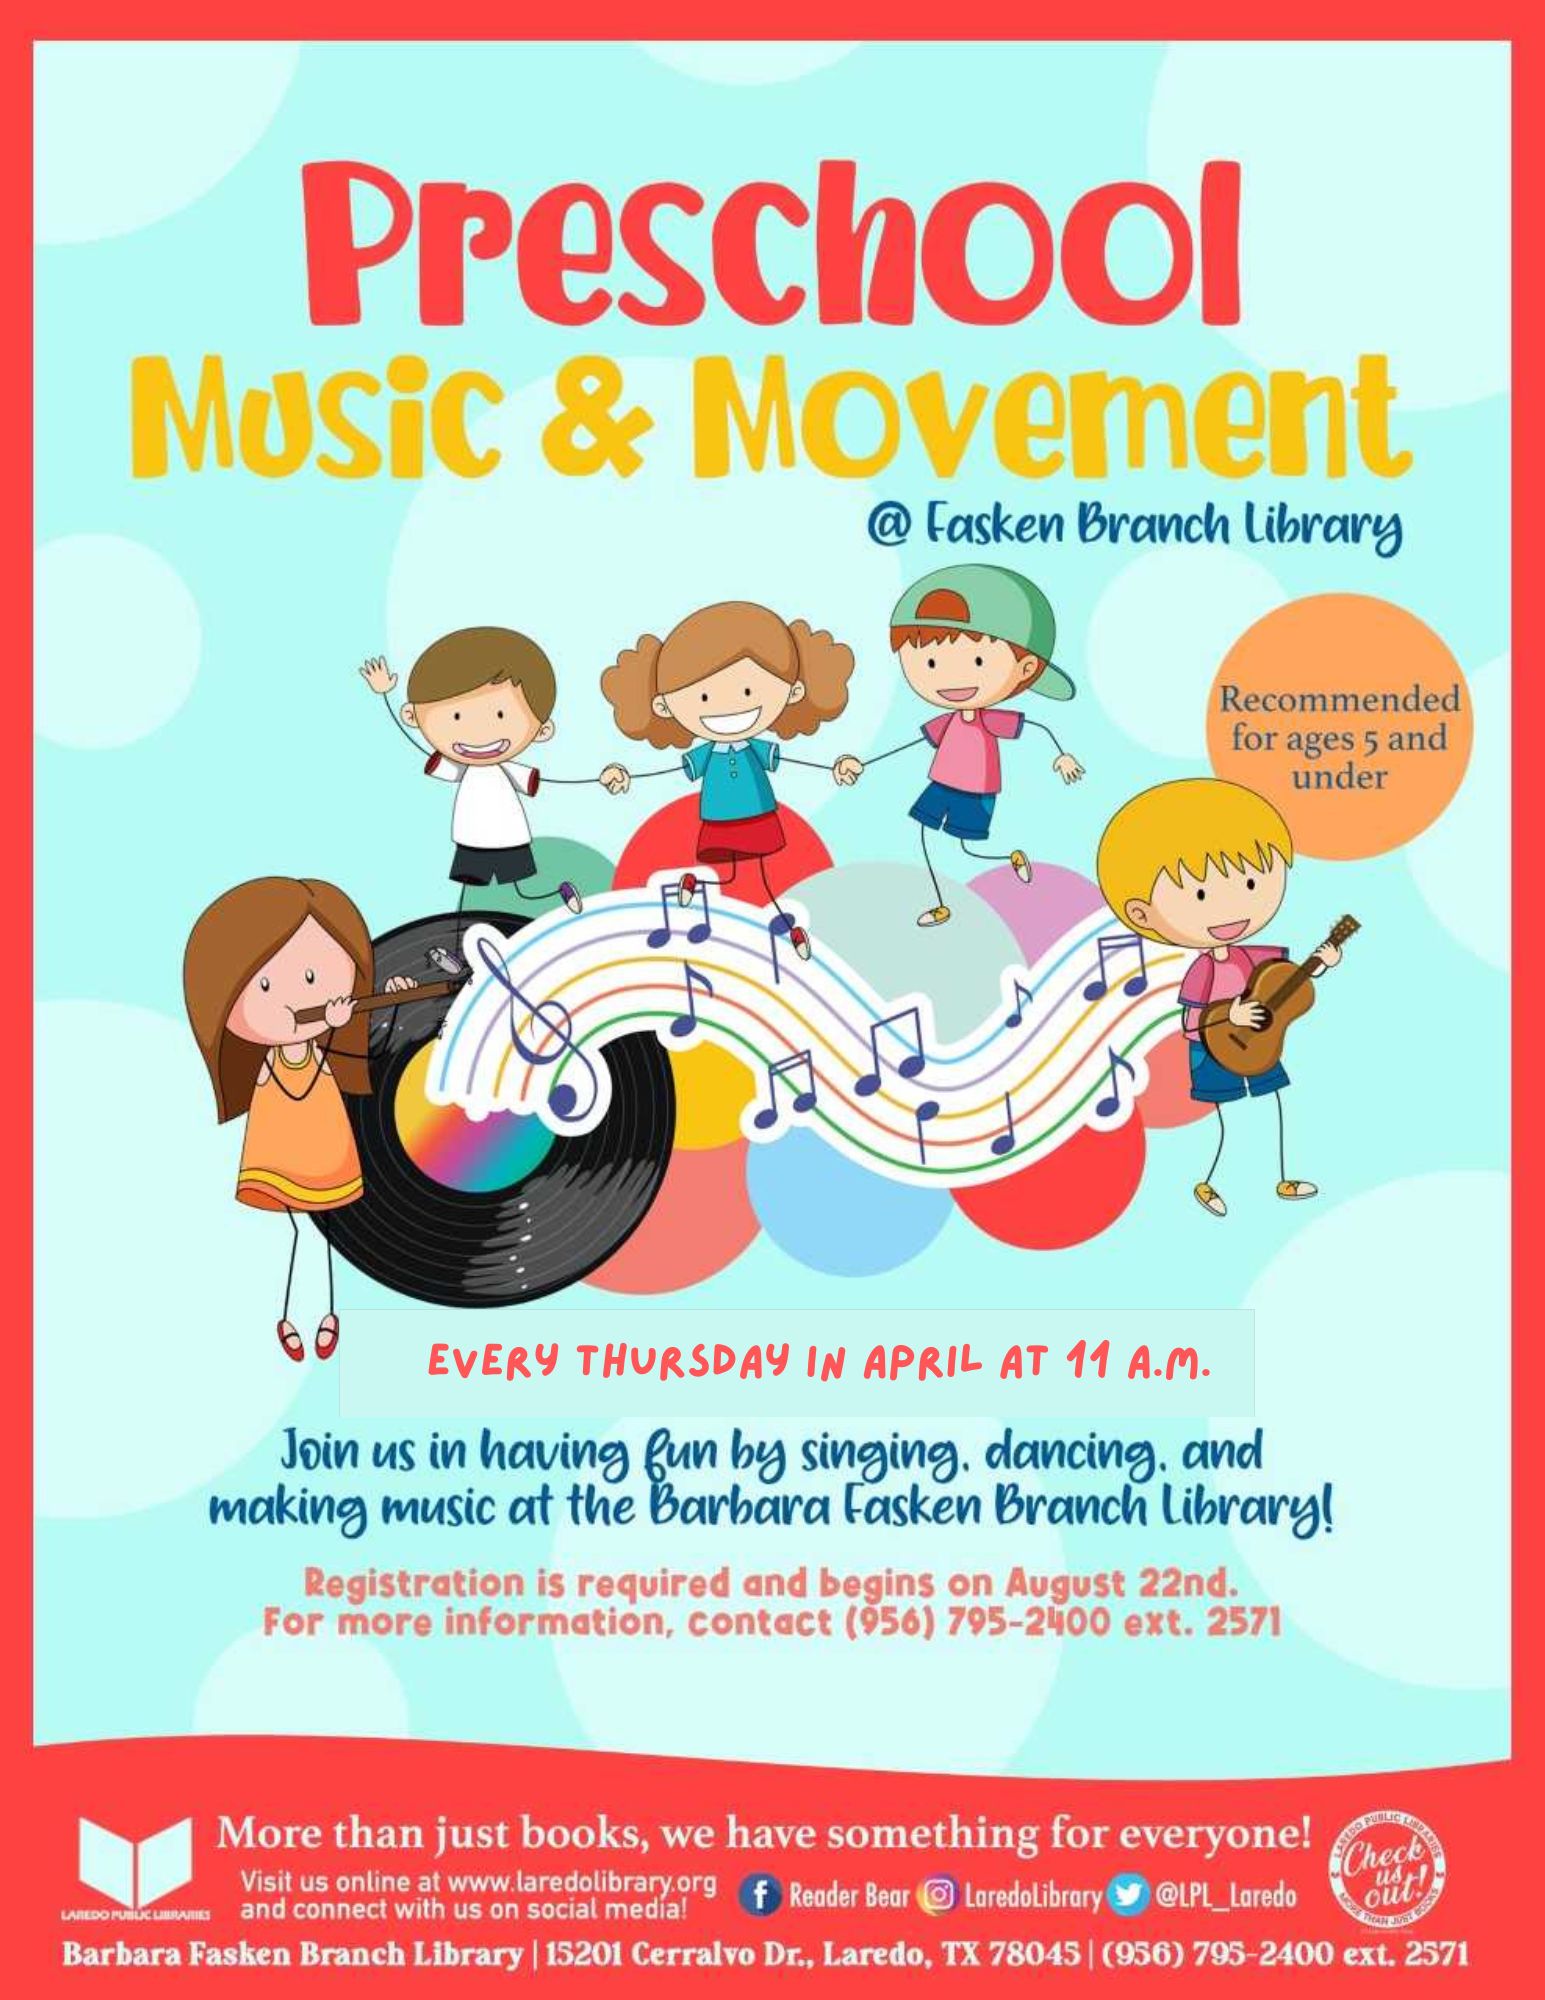 Preschool Music & Movement Registration Begins!